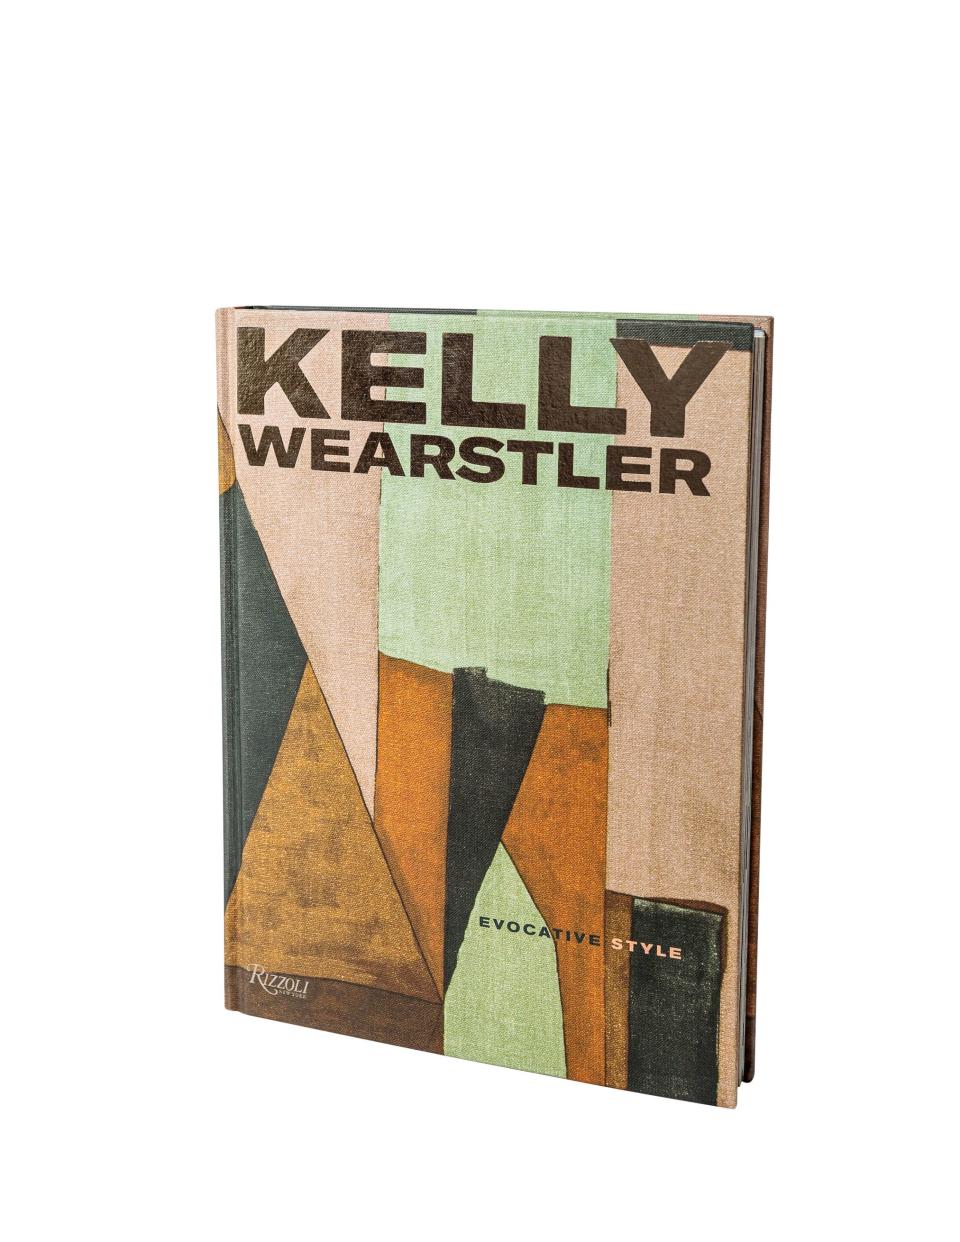 Kelly Wearstler's latest book, Evocative Style (Rizzoli).